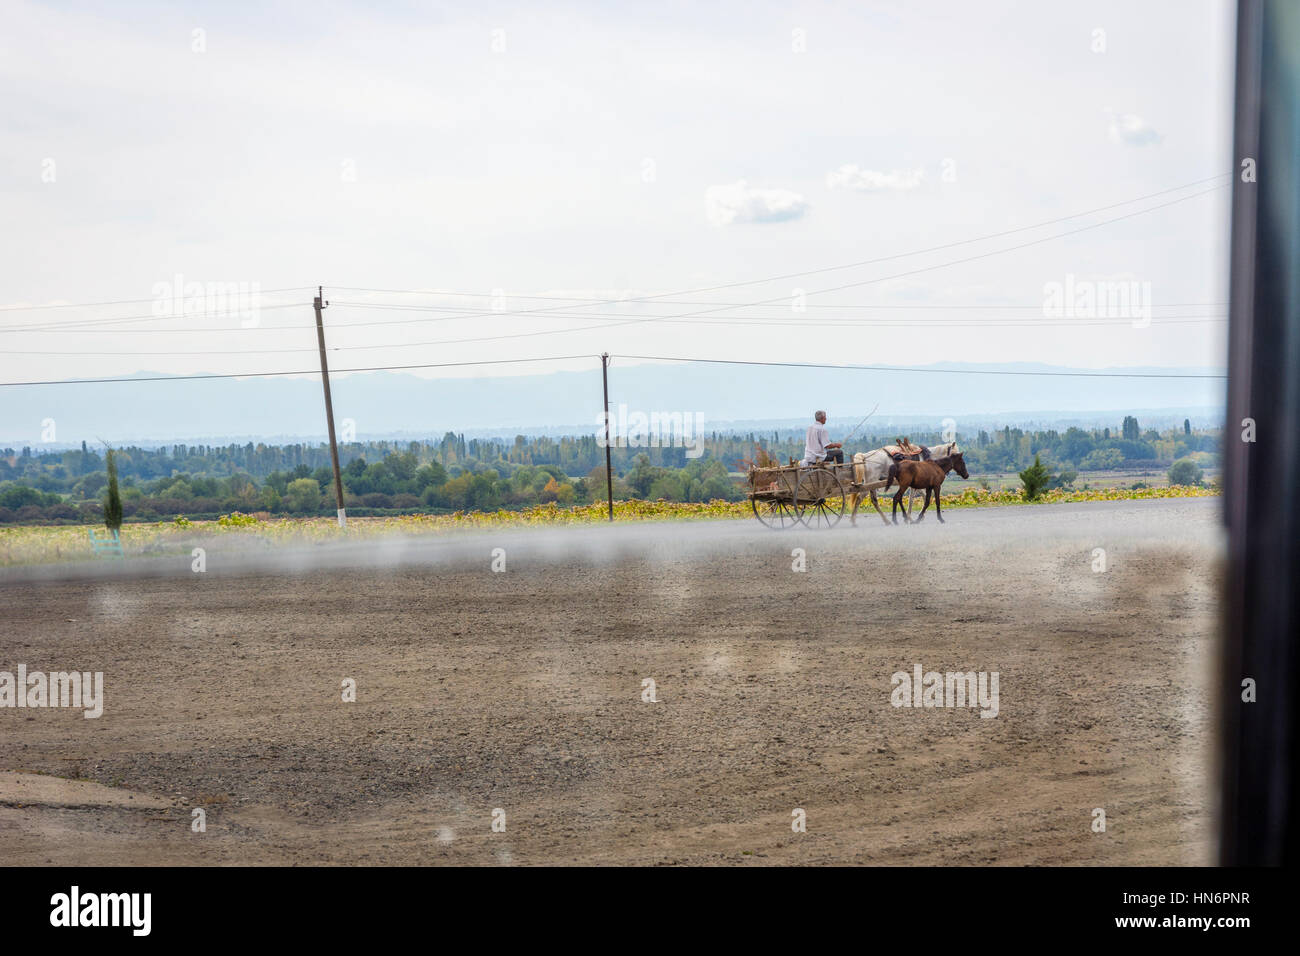 View through car window to horse carriage on the road, Azerbaijan Stock Photo